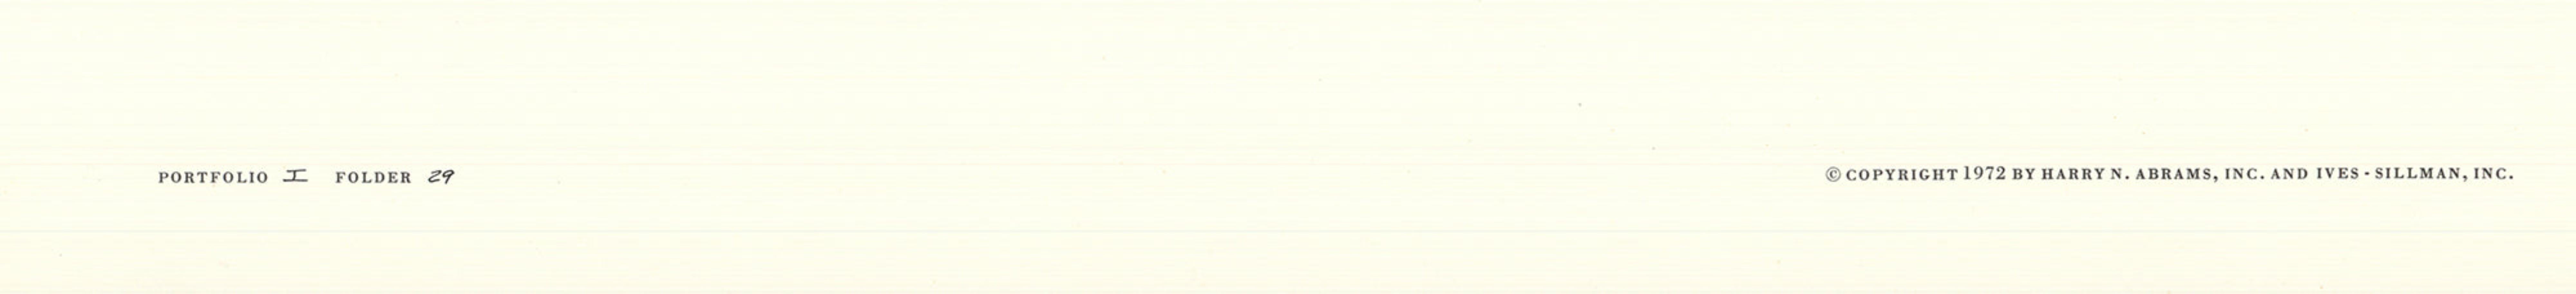 Josef Albers 'Formulation: Articulation Portfolio 1, Folder 29' 1972- Serigraph For Sale 3